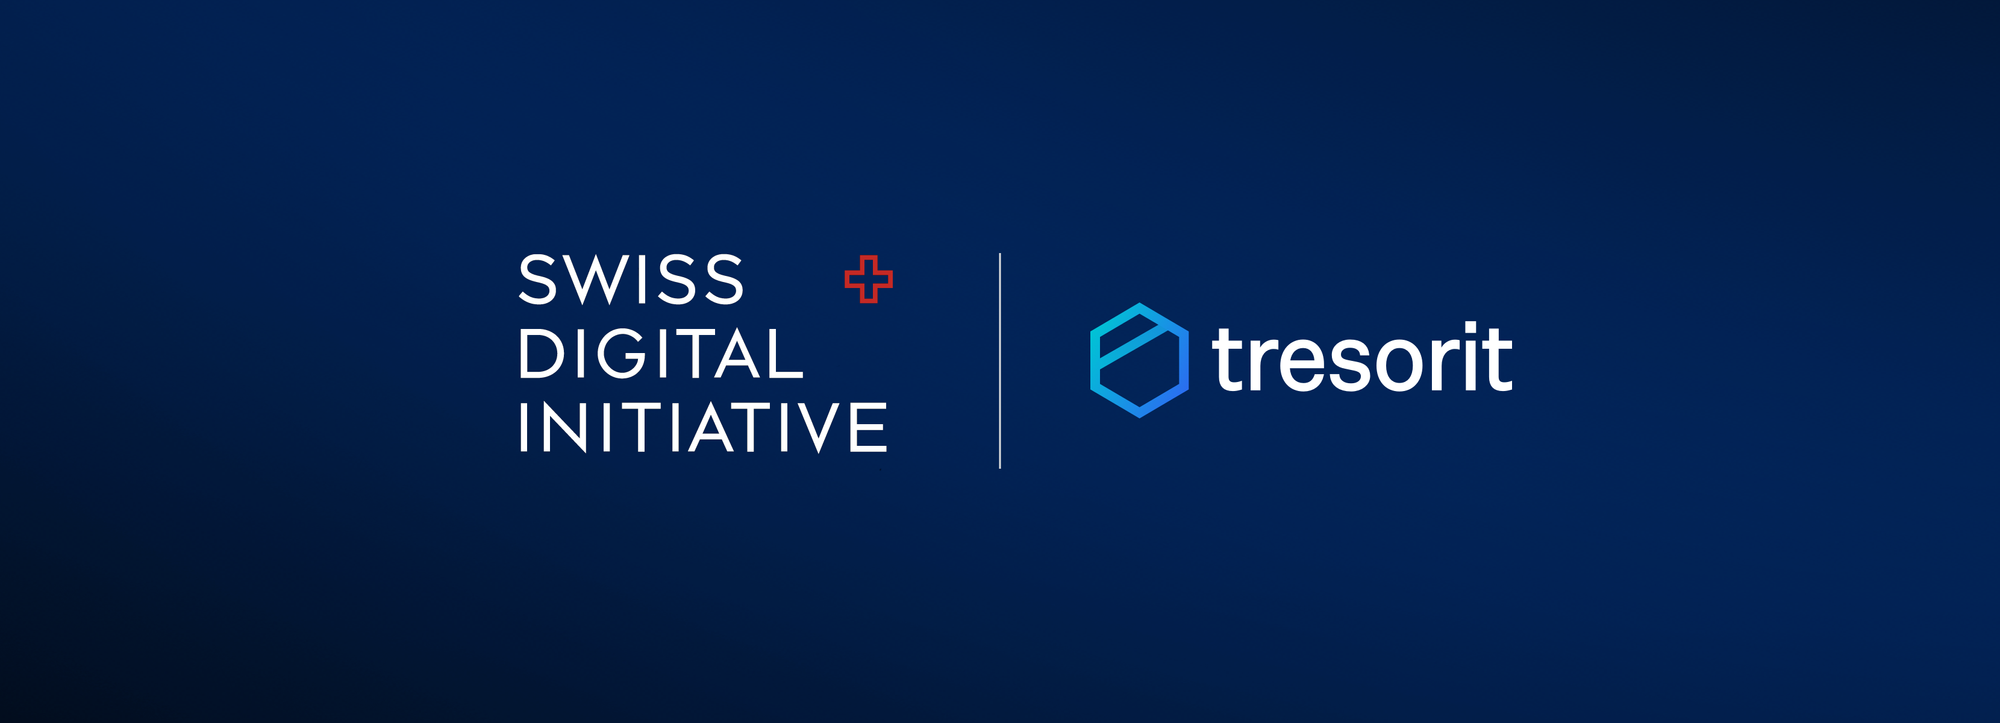 Tresorit tritt Swiss Digital Trust Label bei